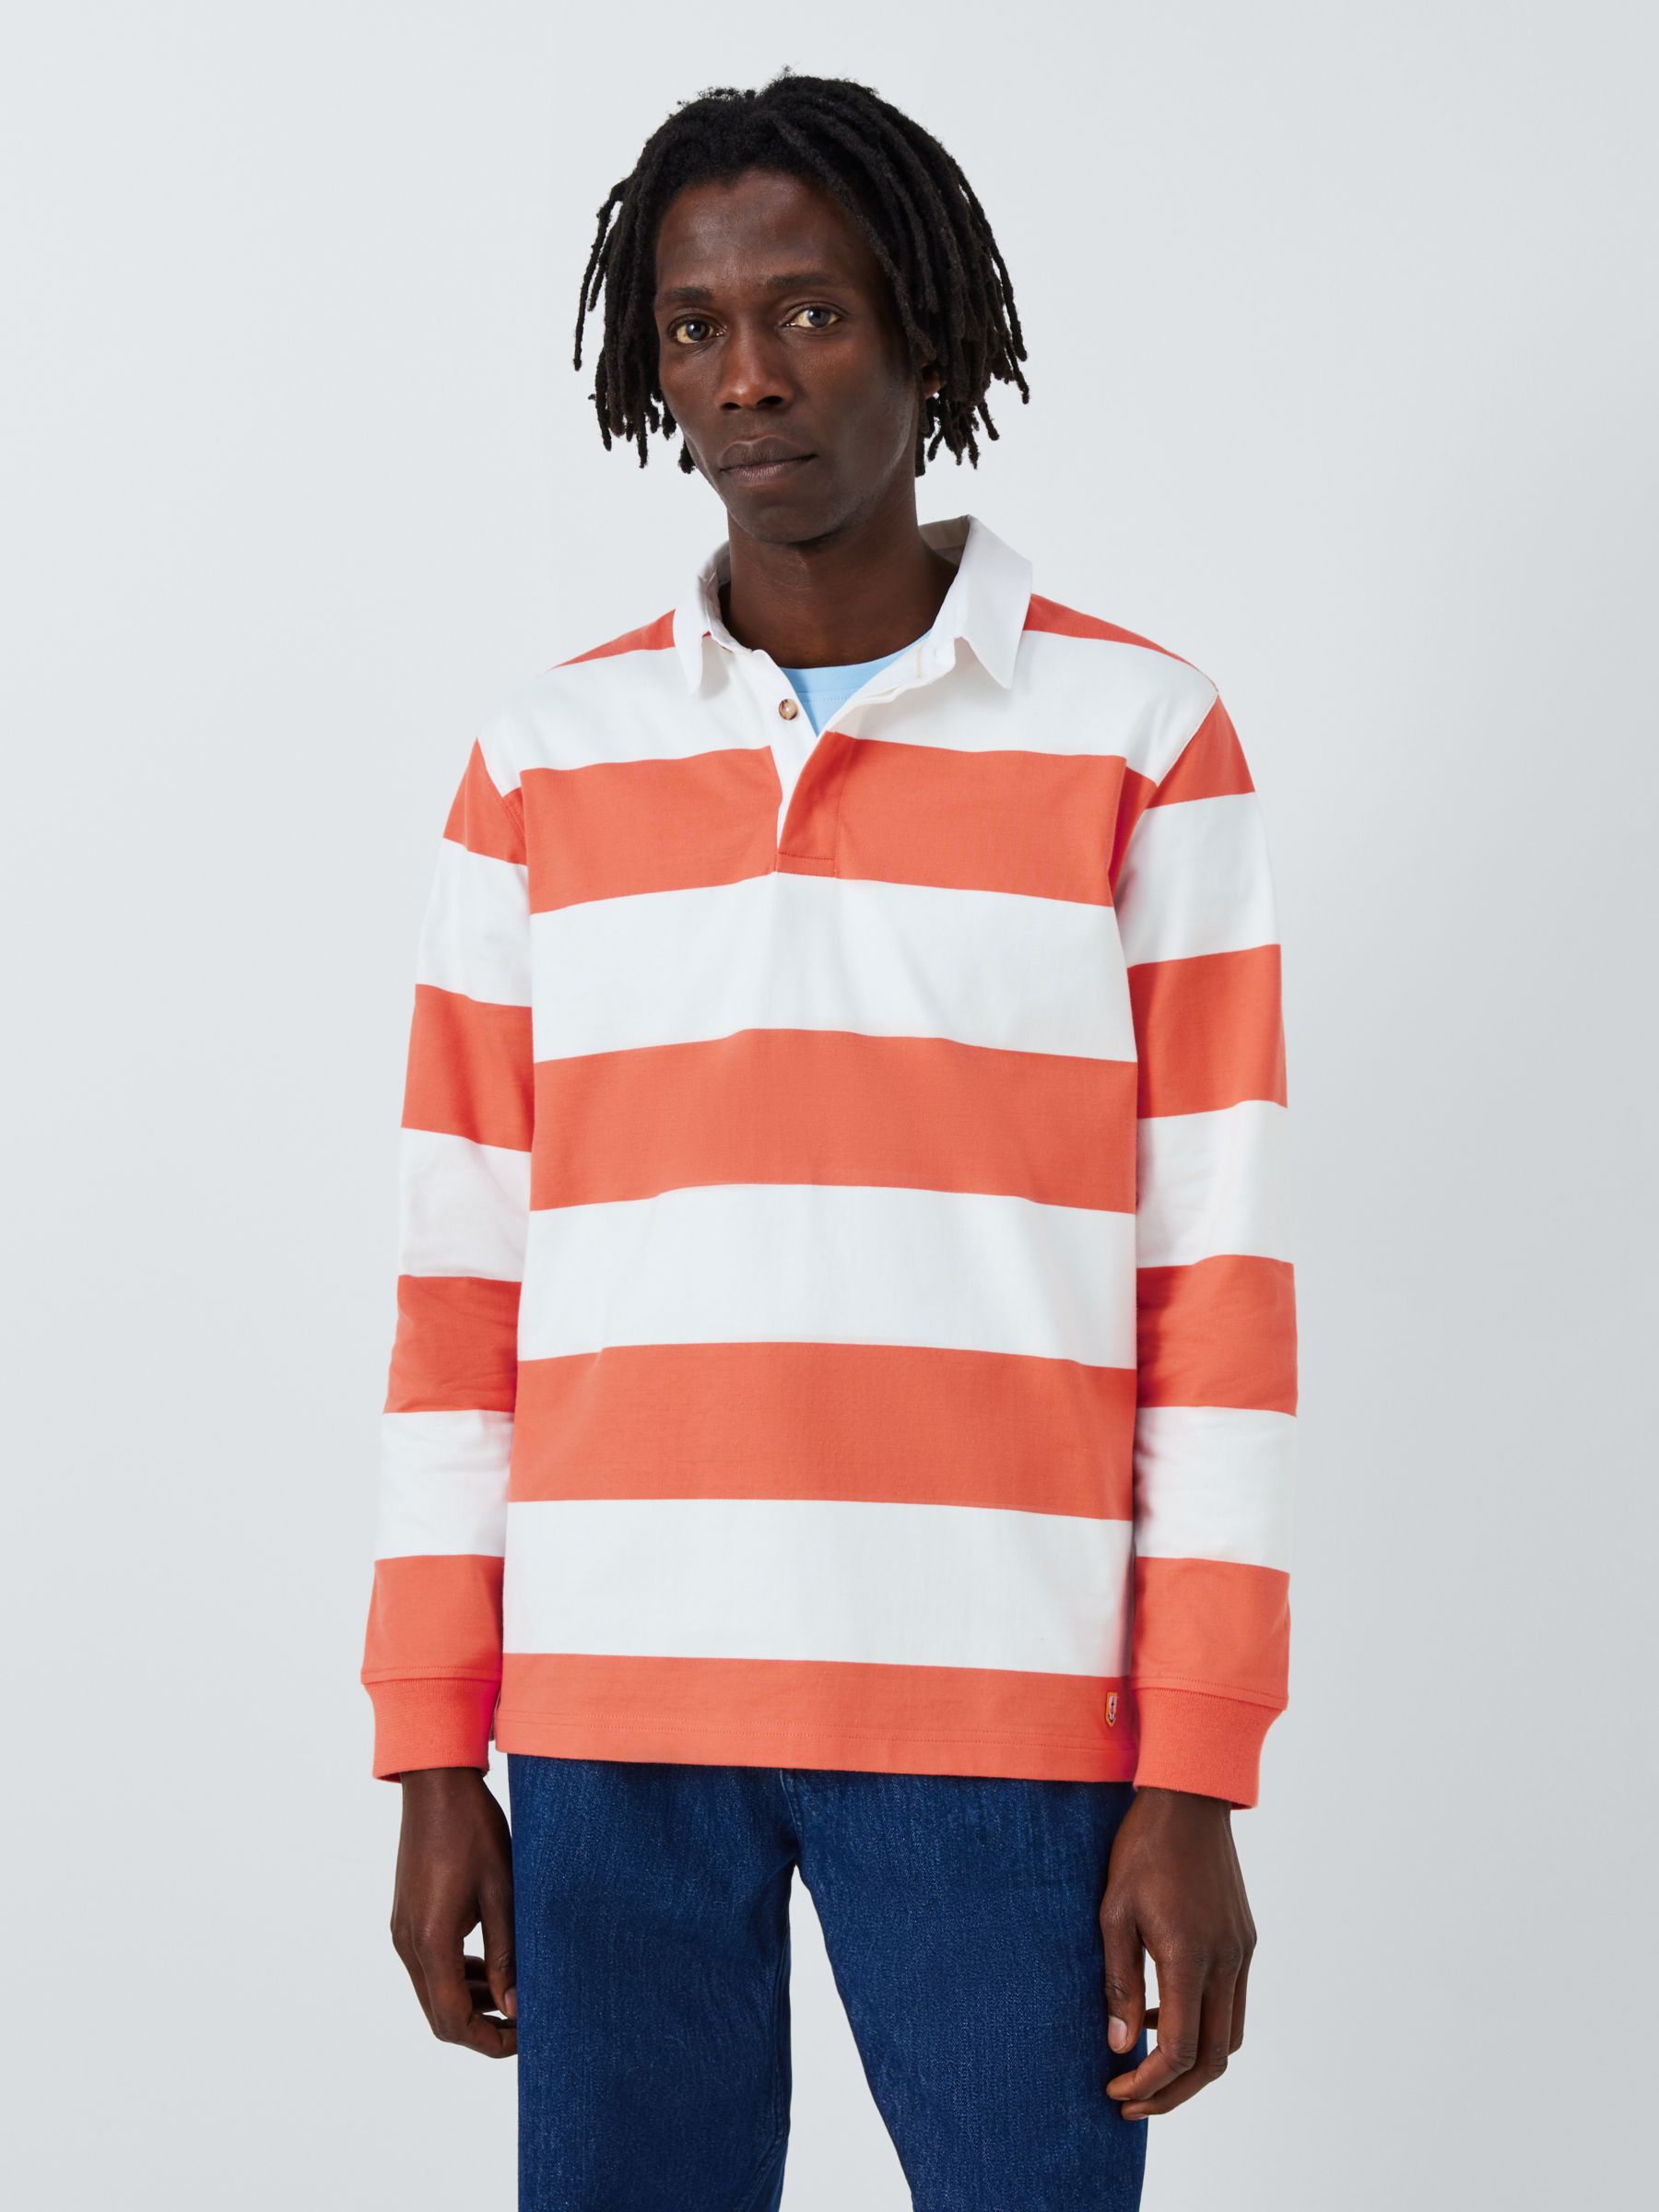 Armor Lux Long Sleeve Striped Polo Shirt, Orange/White, S